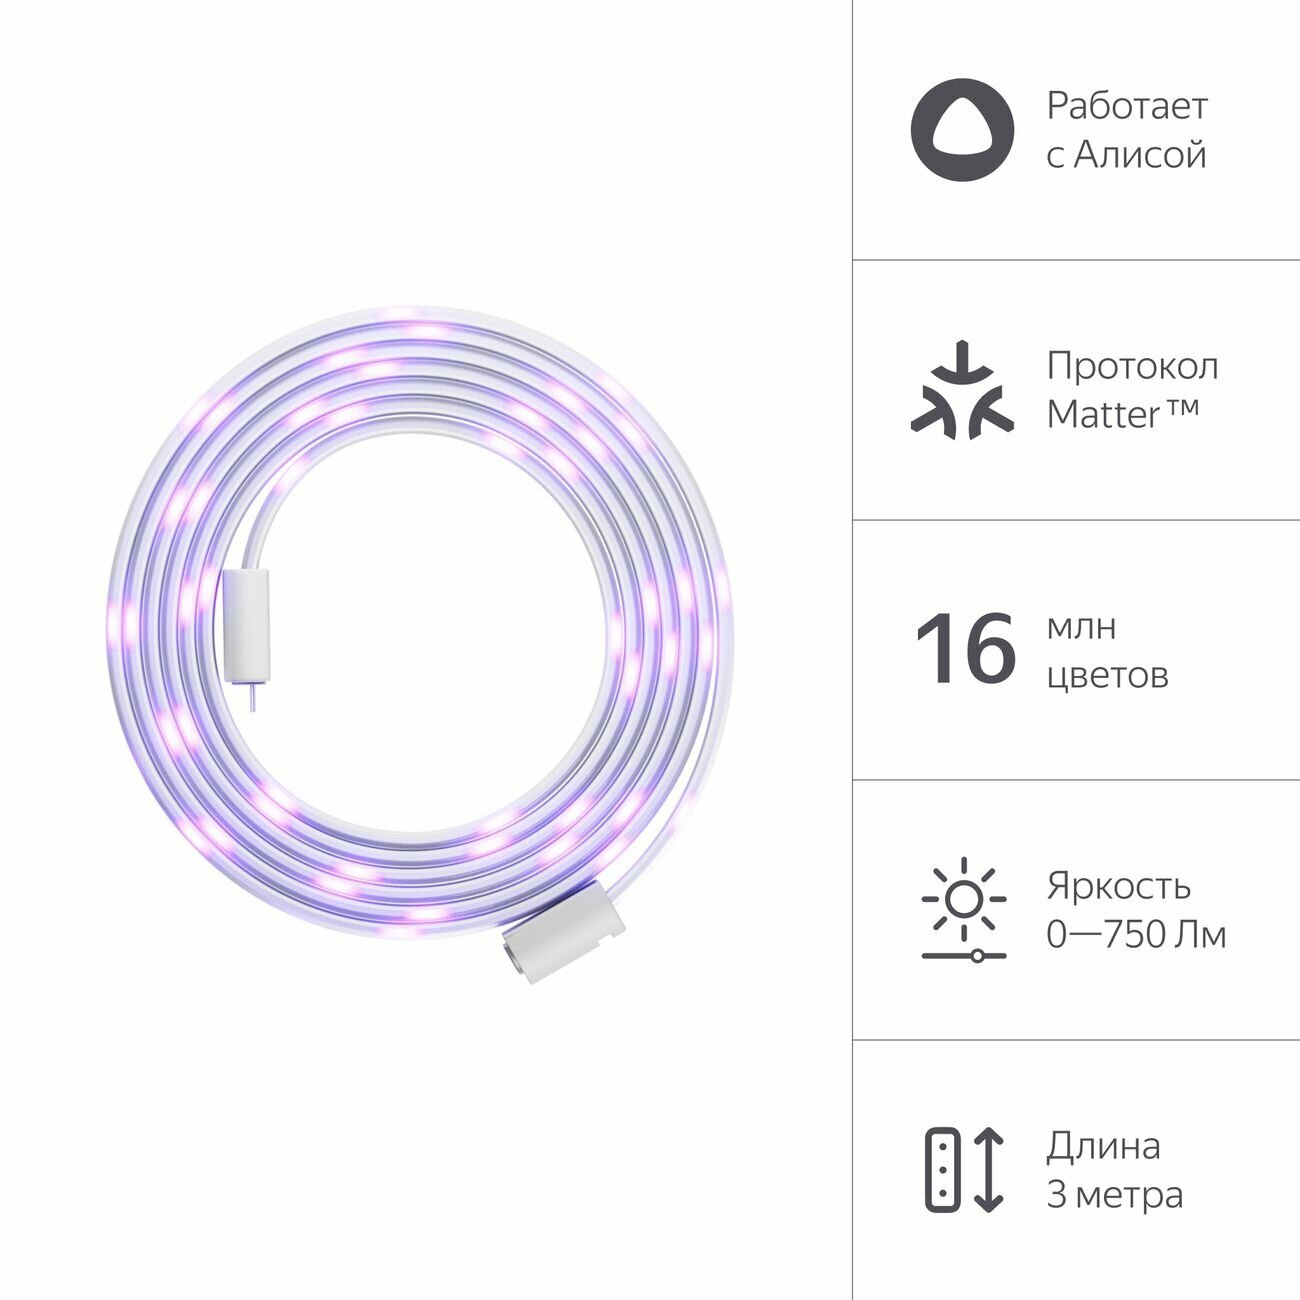 Умная светодиодная лента Яндекс с Алисой, Matter, RGB, 3м